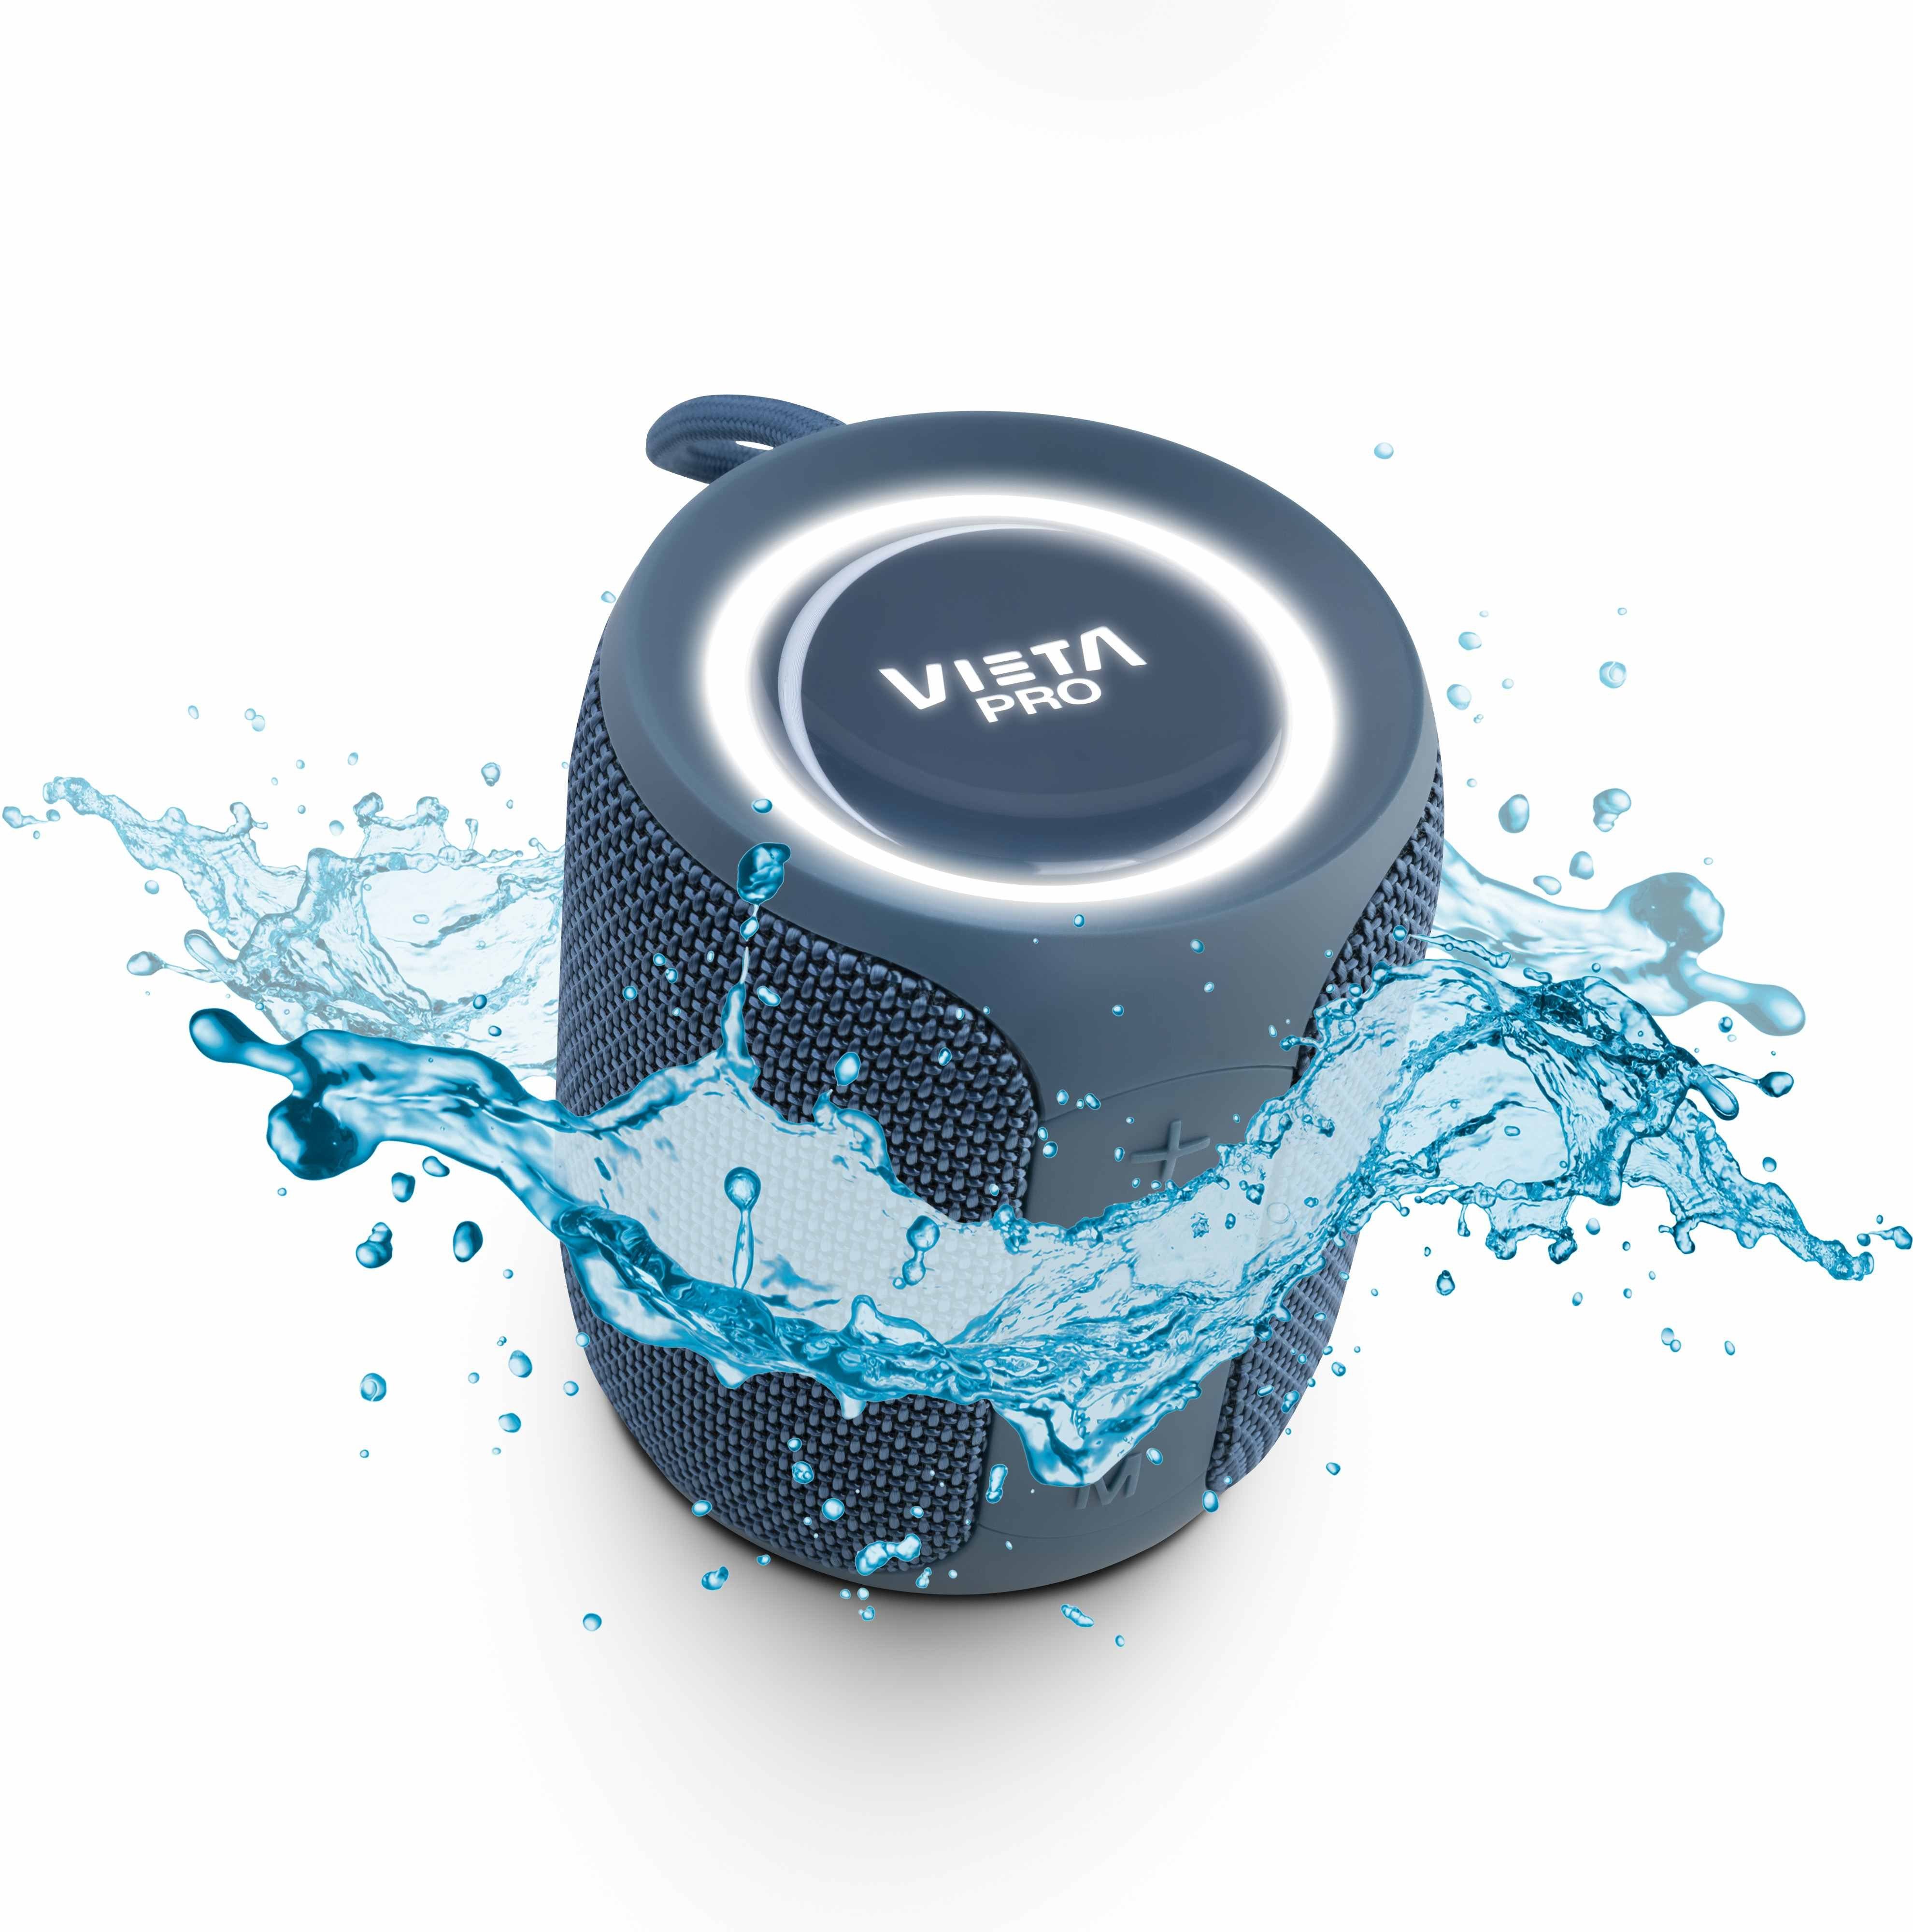 Vieta Pro 20W #GROOVE Lautsprecher Bluetooth Wireless Speaker